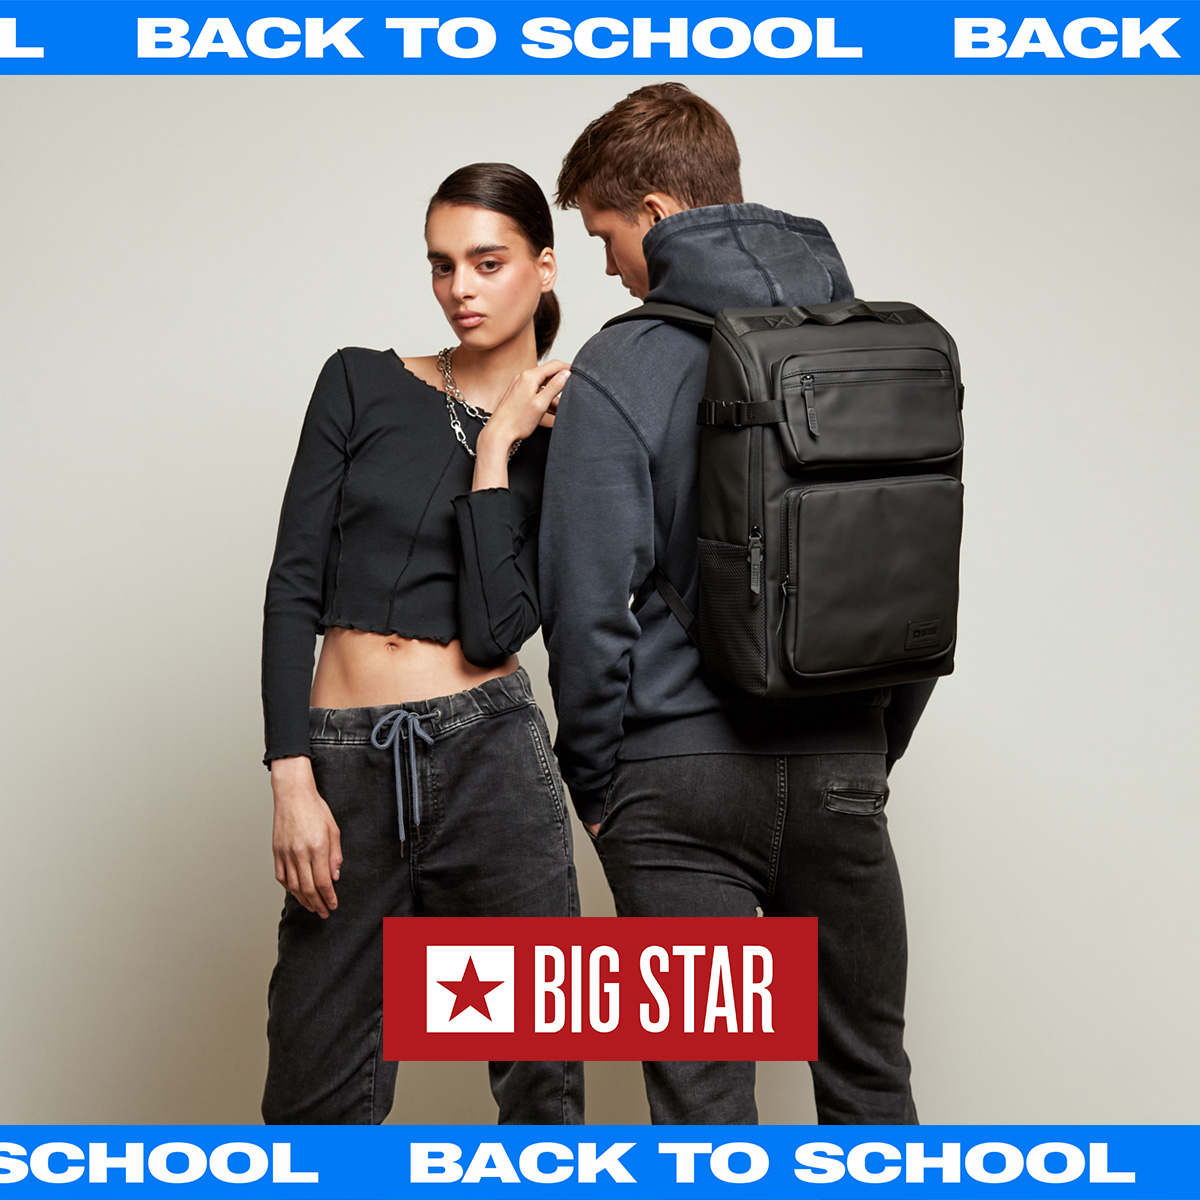 Big Star, BACK TO SCHOOL Z BIG STAR!